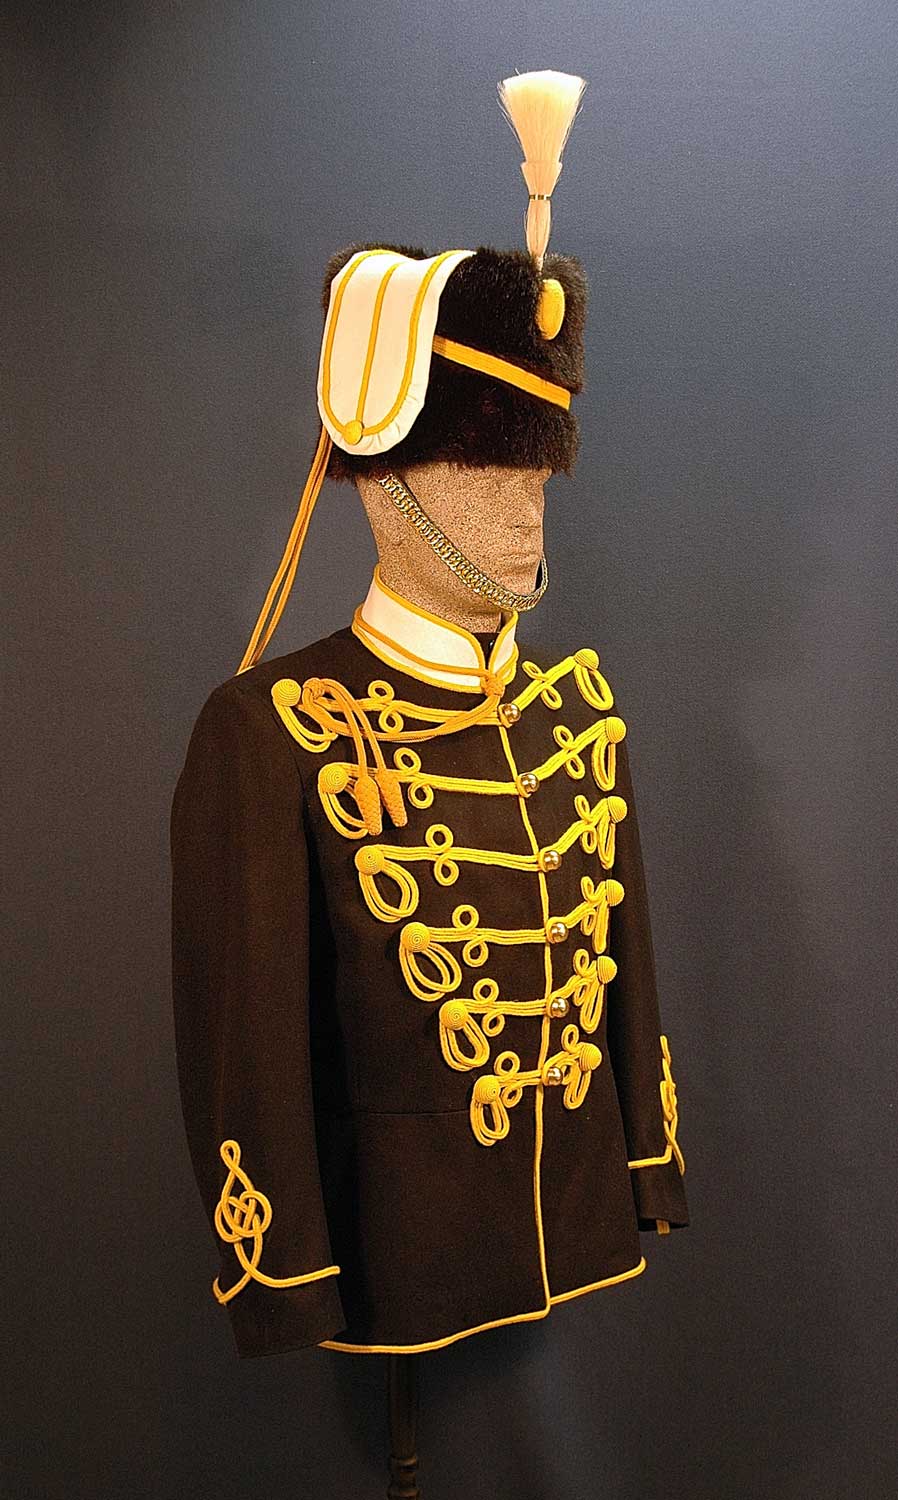 Canadian, 1st Hussars, Trooper (Dress)